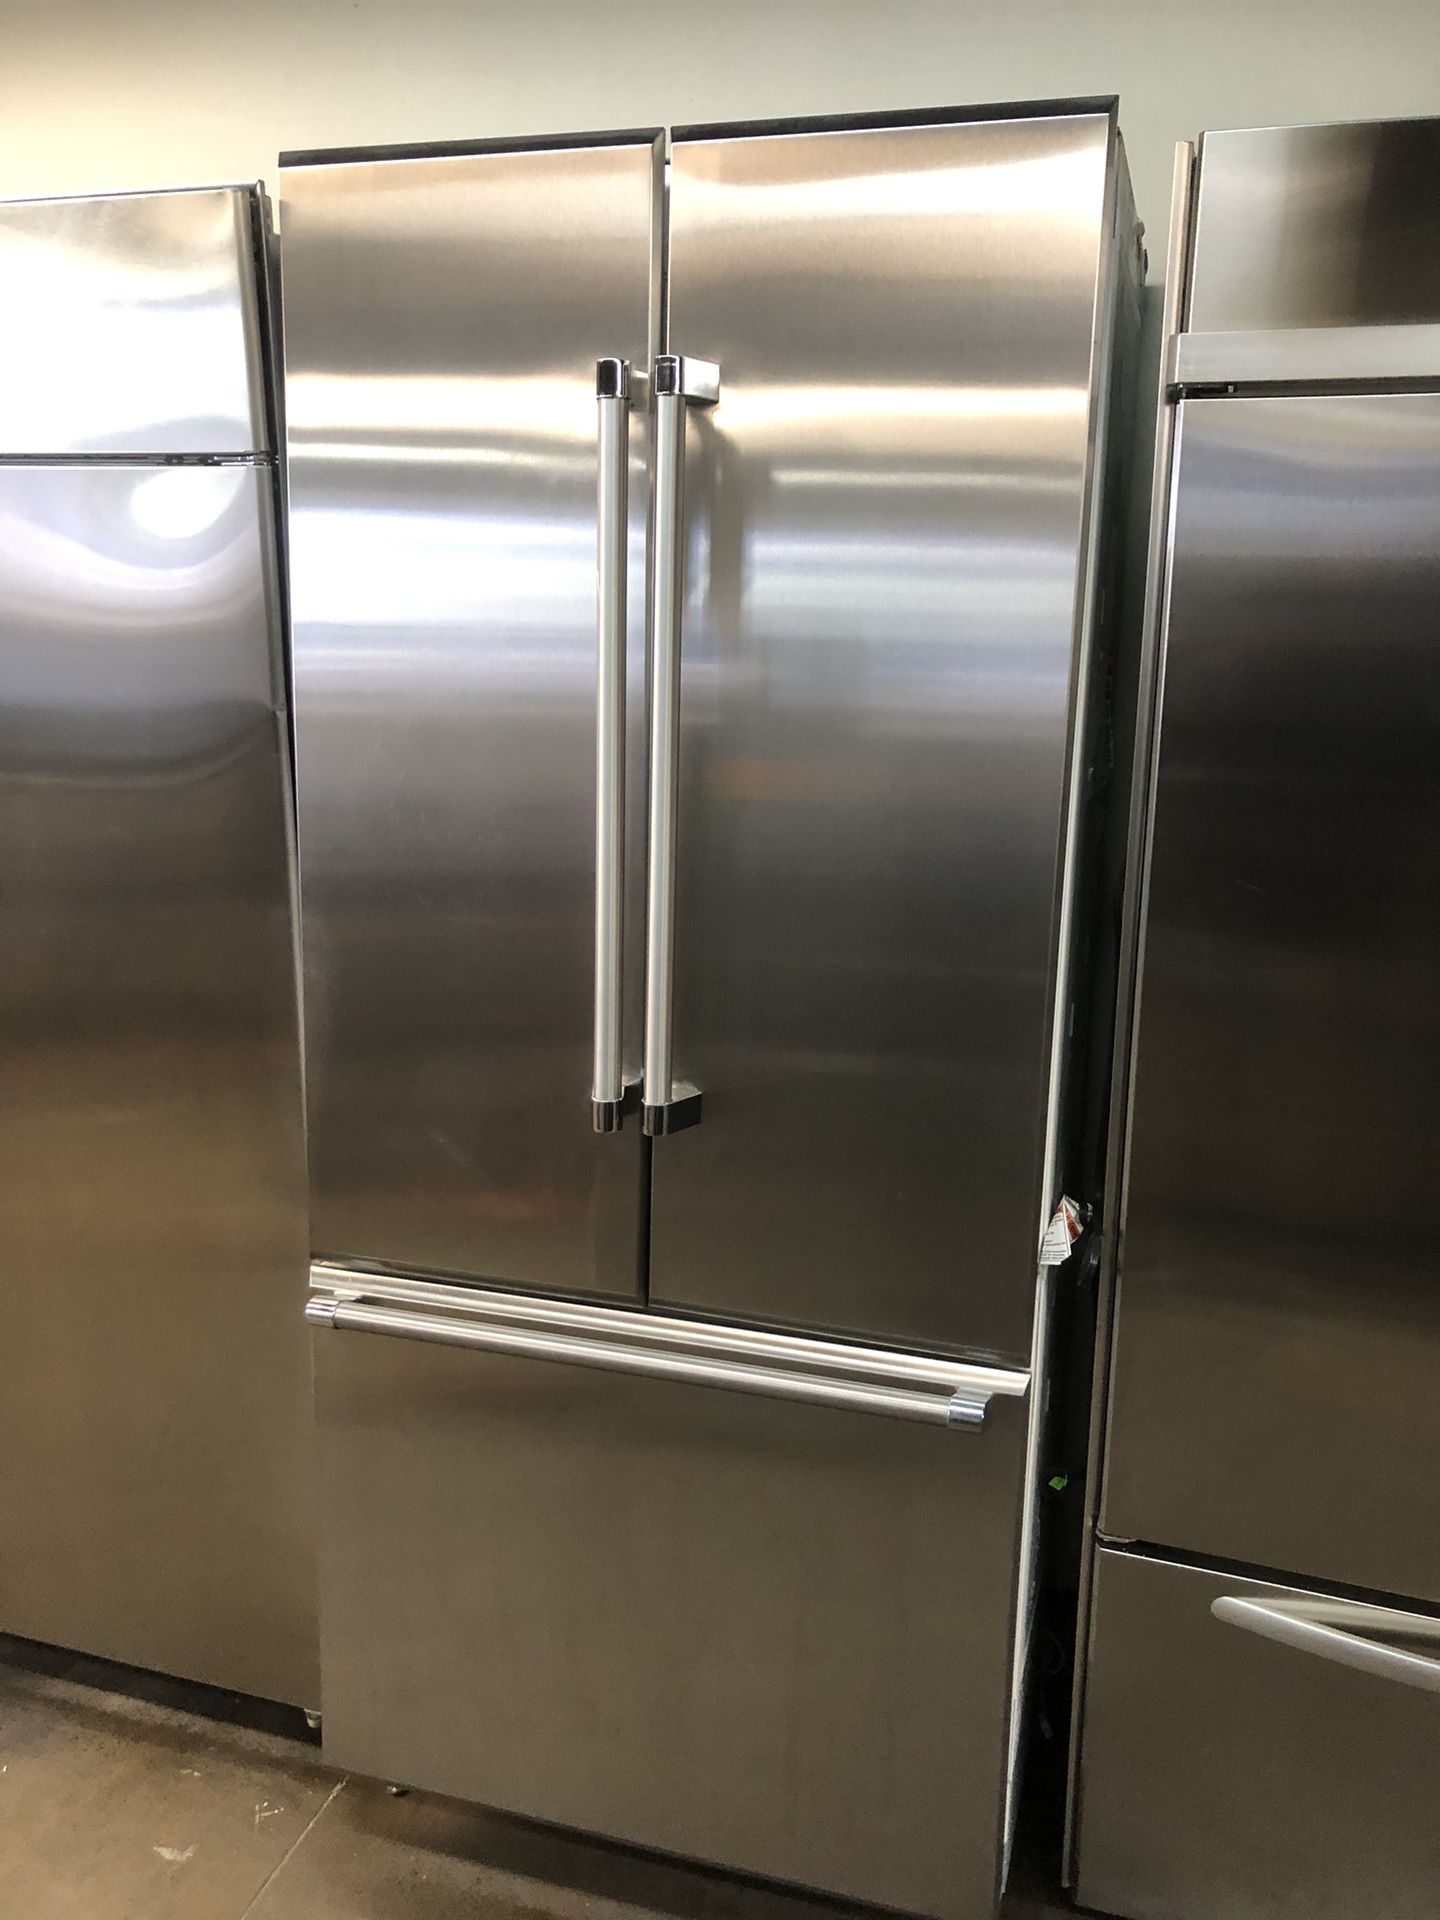 Thermador 36”Wide Built In Bottom Freezer French Door Refrigerator Stainless Steel 